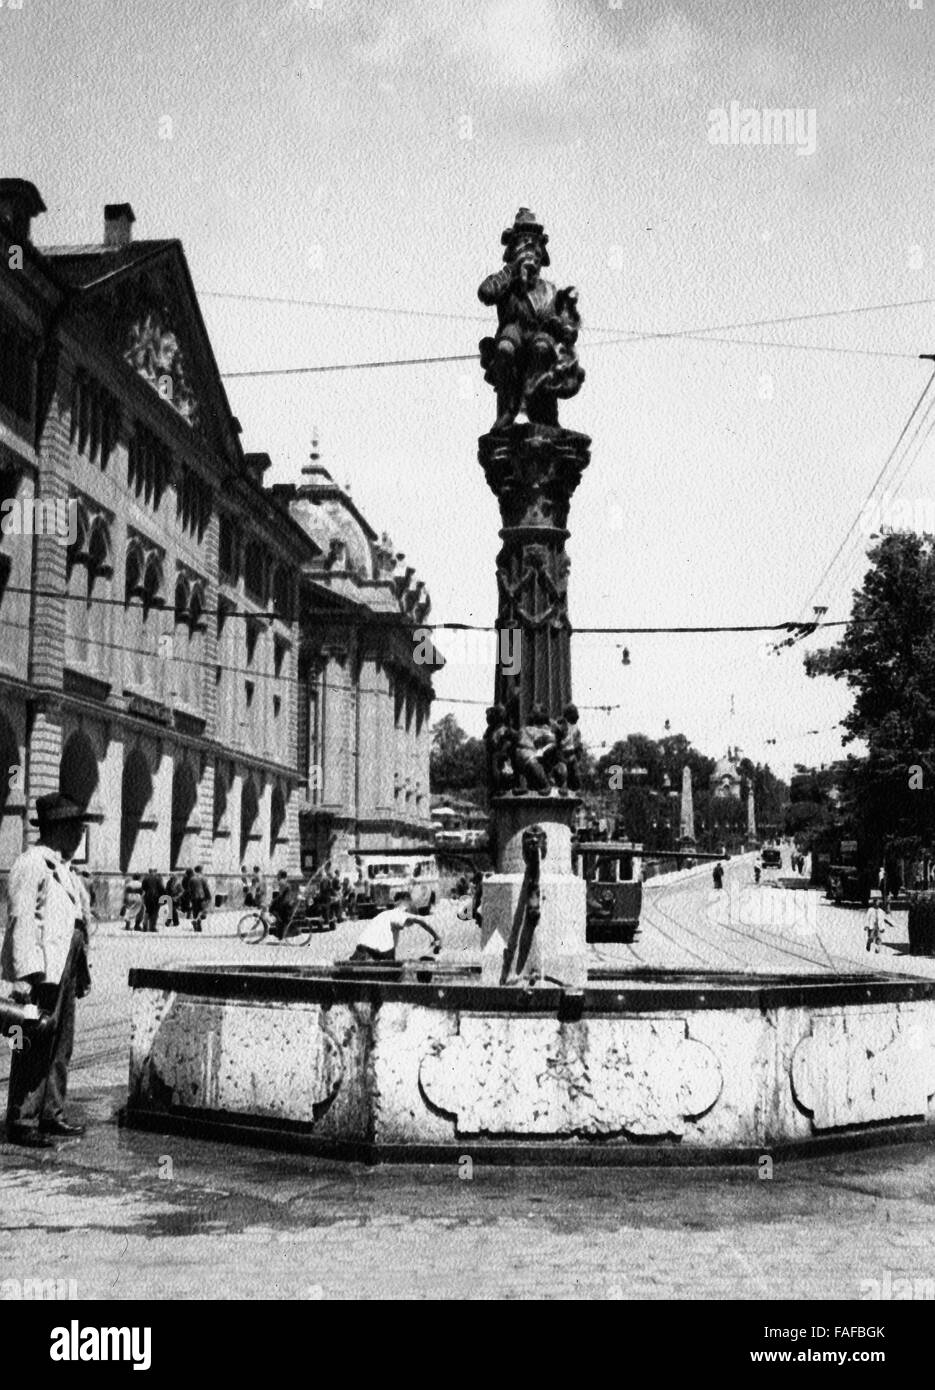 Der Kindlifresserbrunnen a Berna, Schweiz 1930er Jahre. Bambino Eater fontana della città di Berna in Svizzera, 1930s. Foto Stock